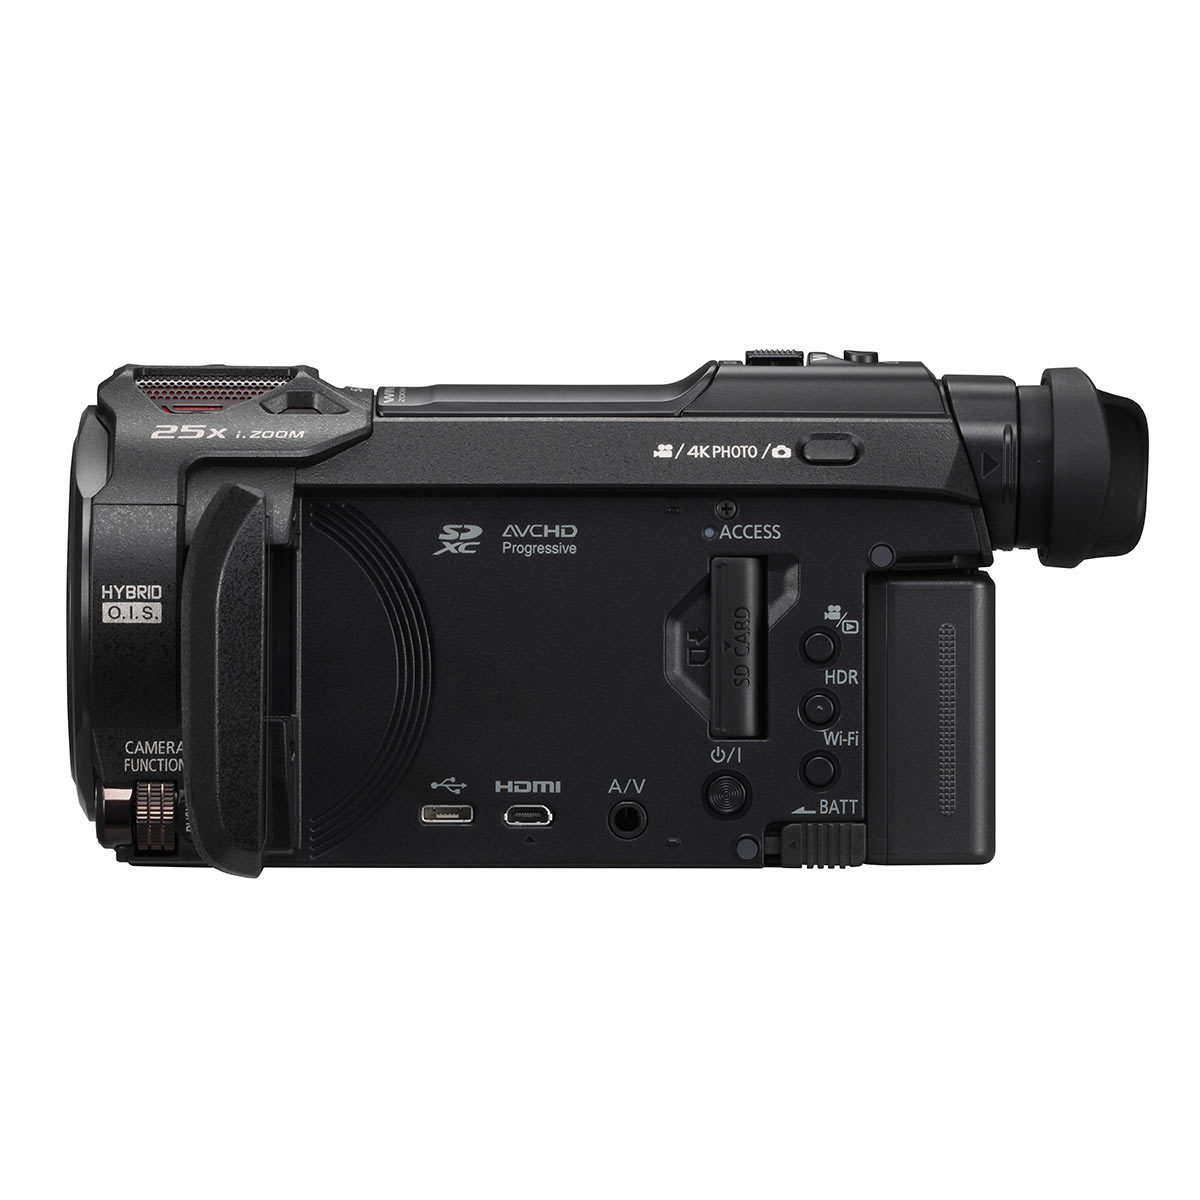 Panasonic HC-VXF990EBK 4K Ultra HD Camcorder